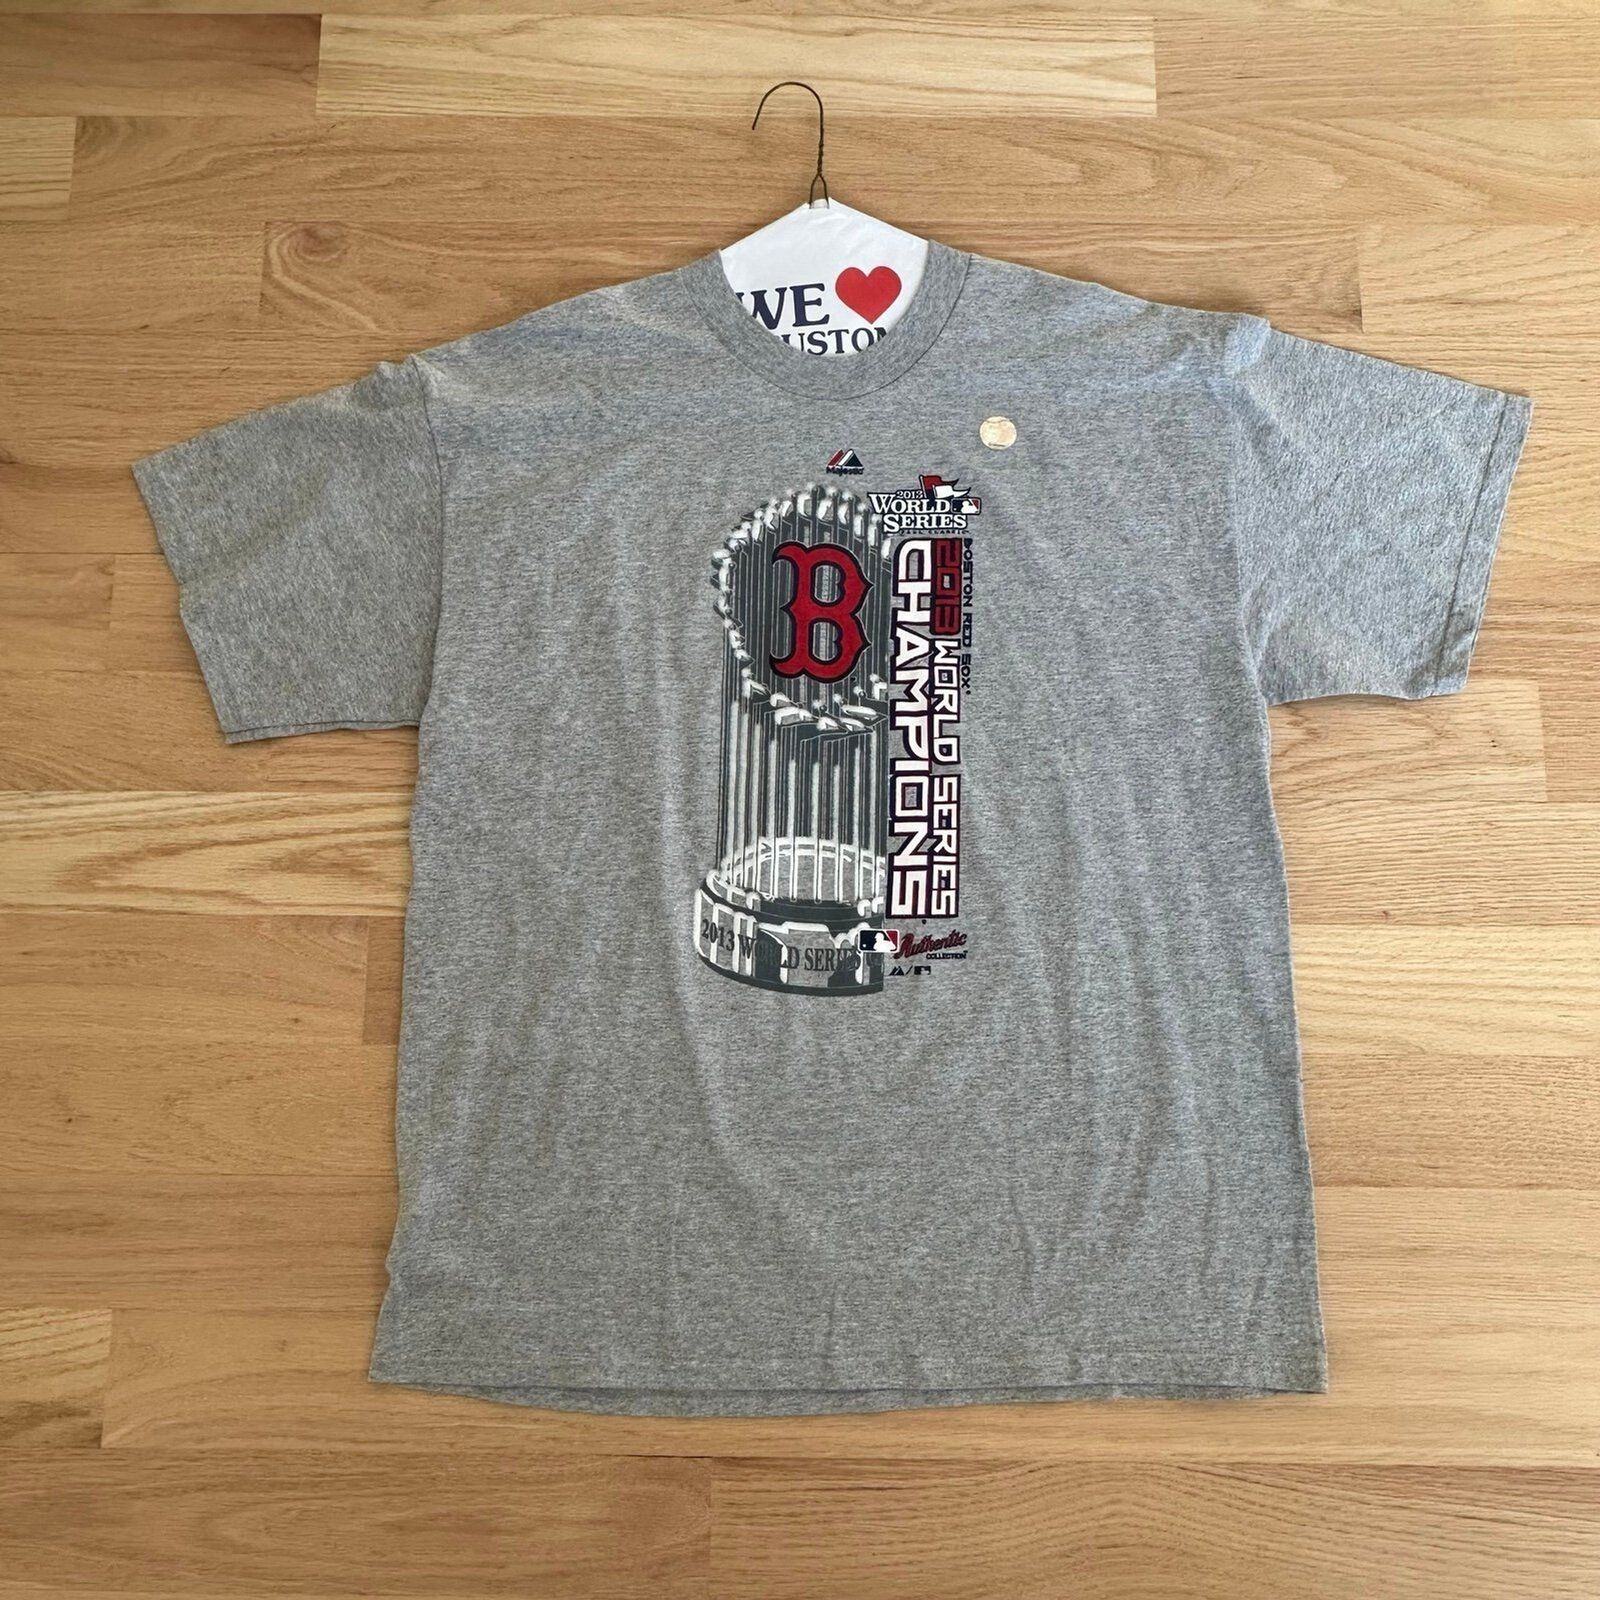 NEW Boston Red Sox 2013 World Series Champions T-Shirt, Gray - Size XL